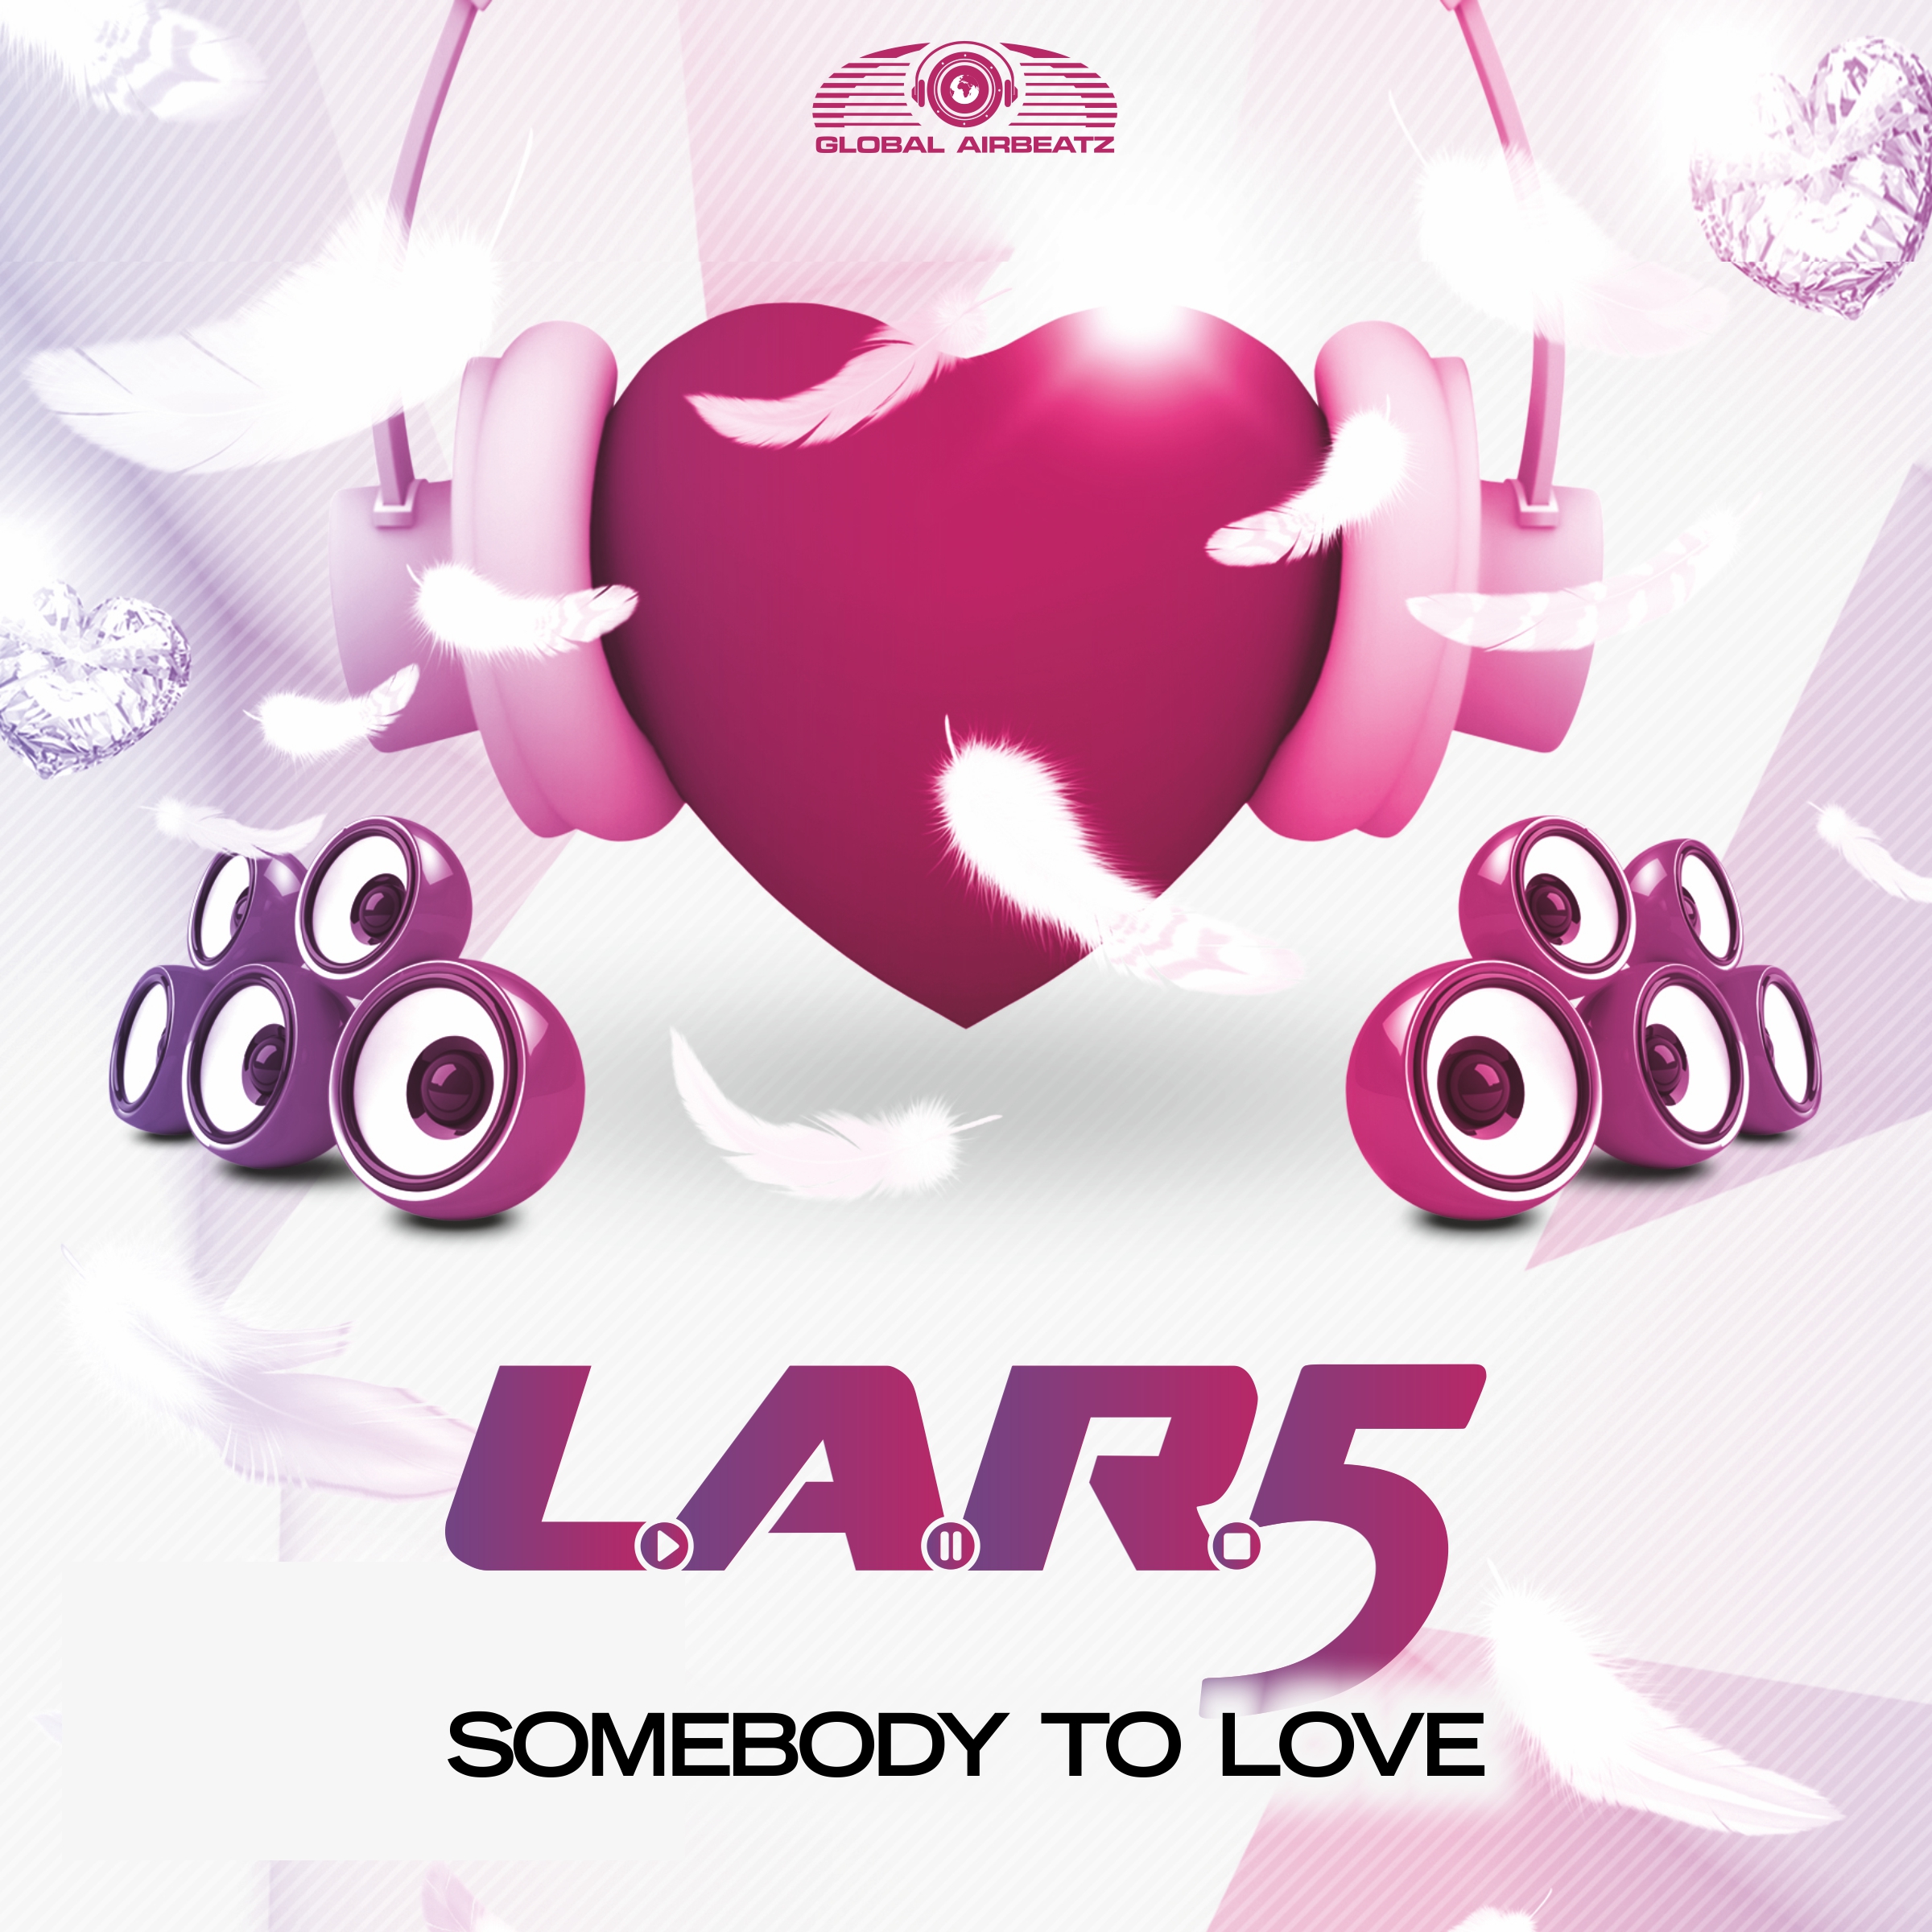 G love remix. Somebody to Love. To Love. Трек Somebody to Love Remix. R + G=Love.